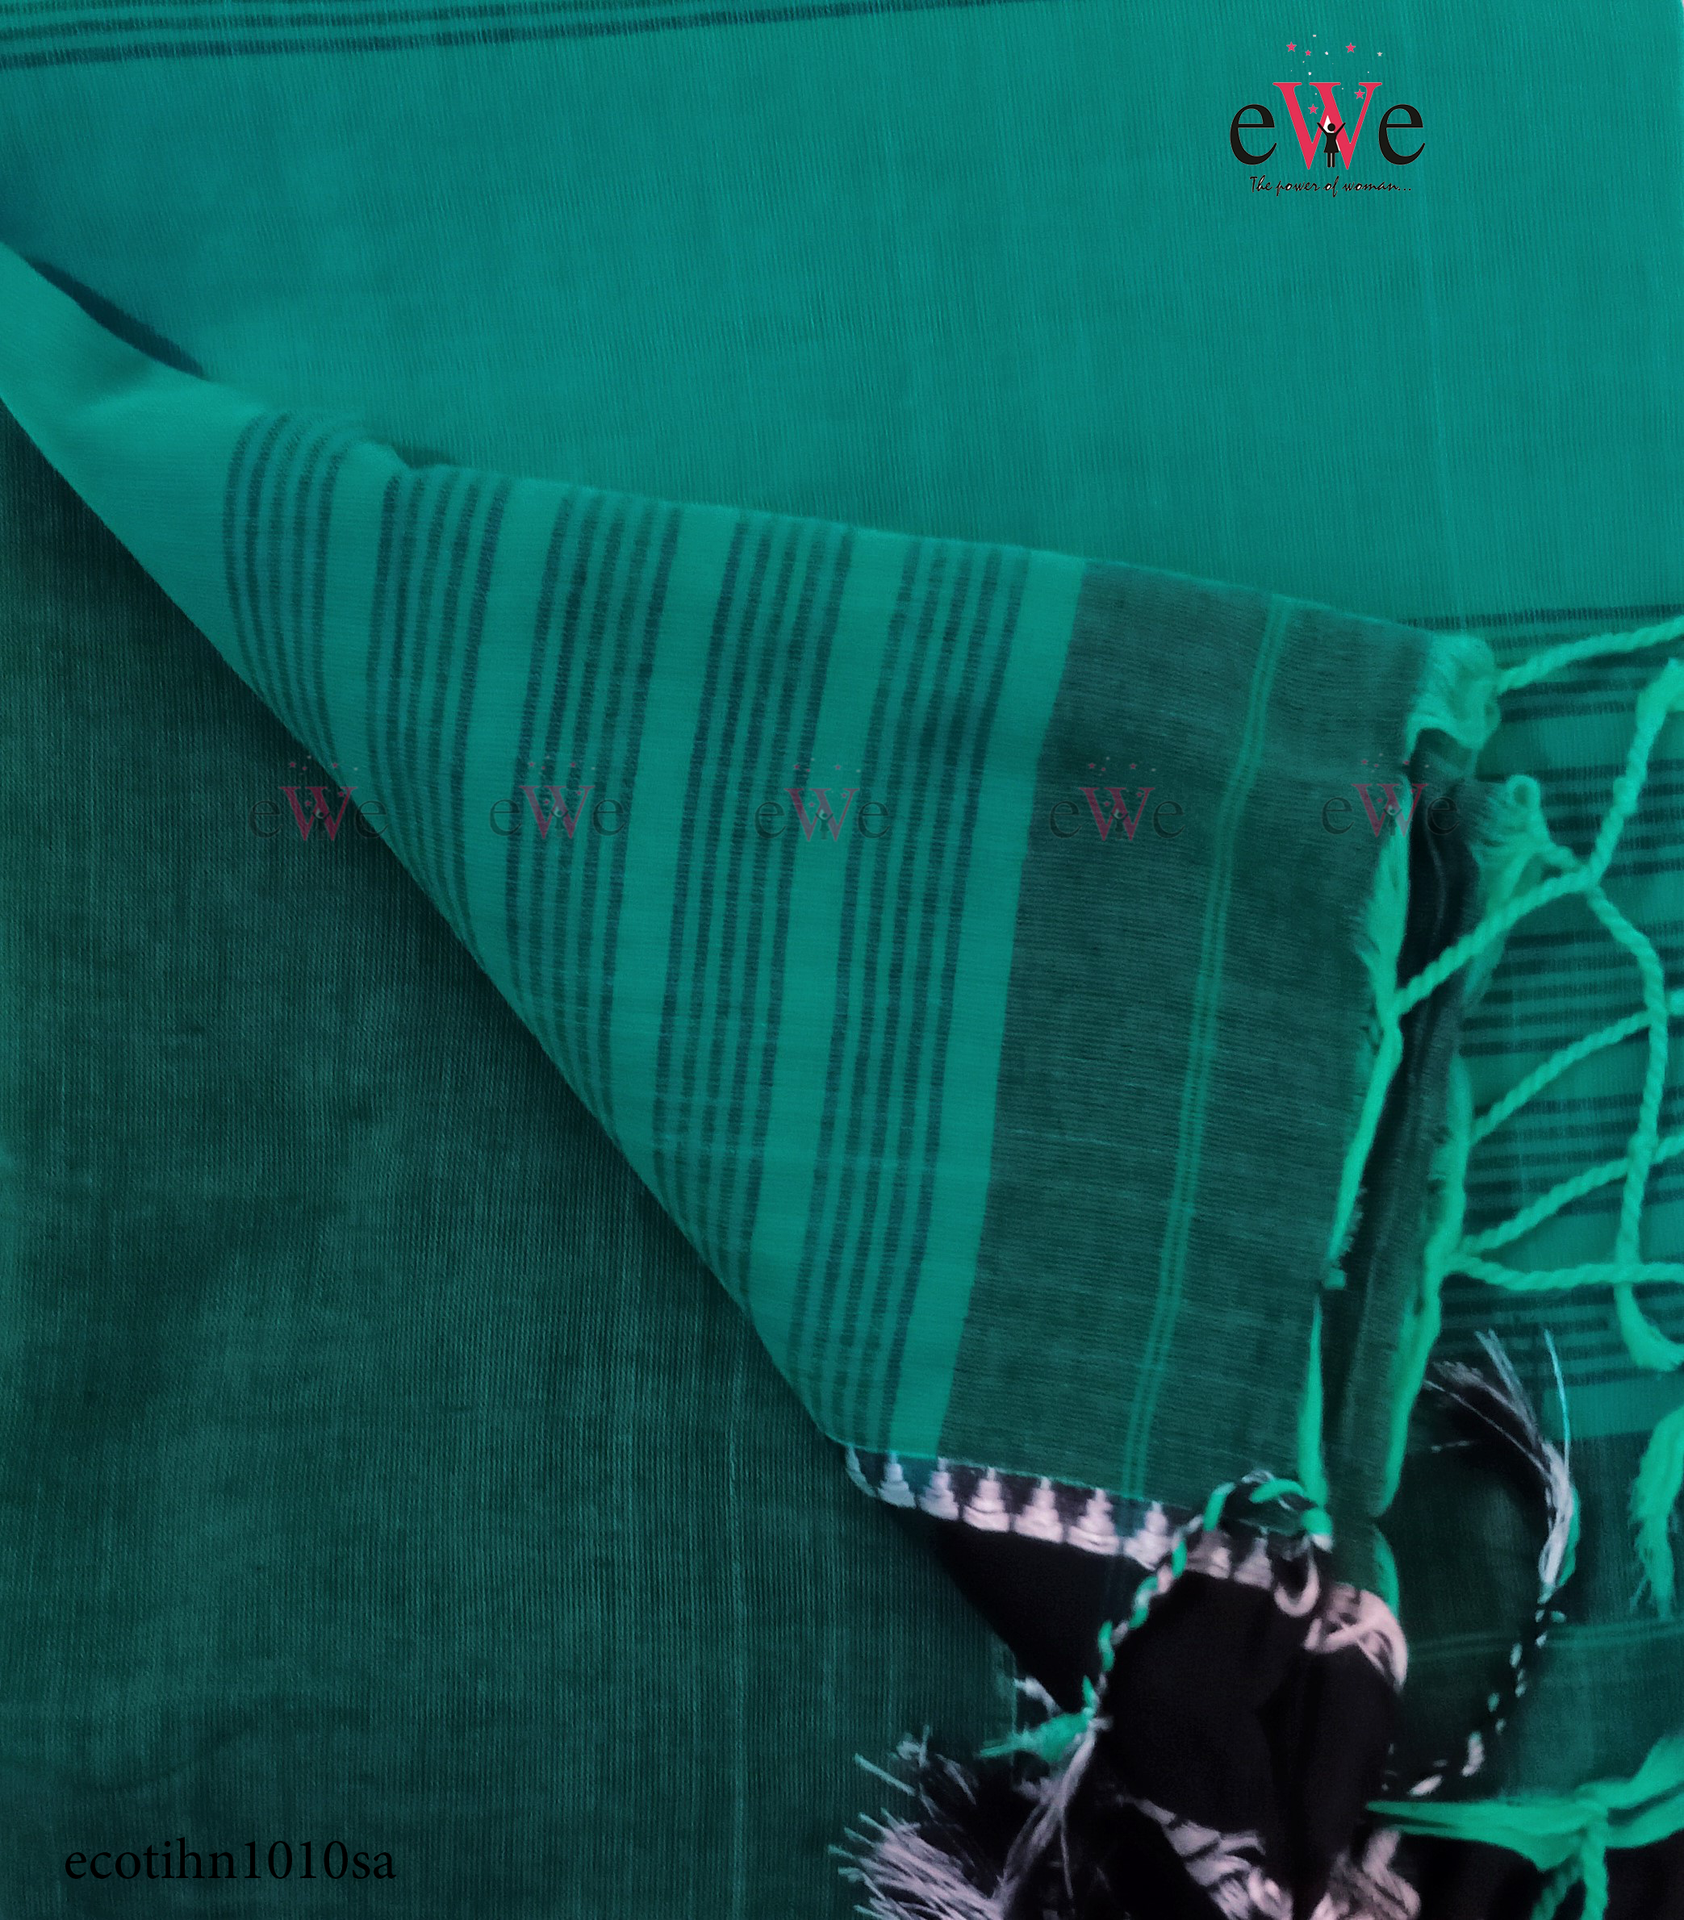 Green &amp; Black Handloom cotton saree with Designer Border